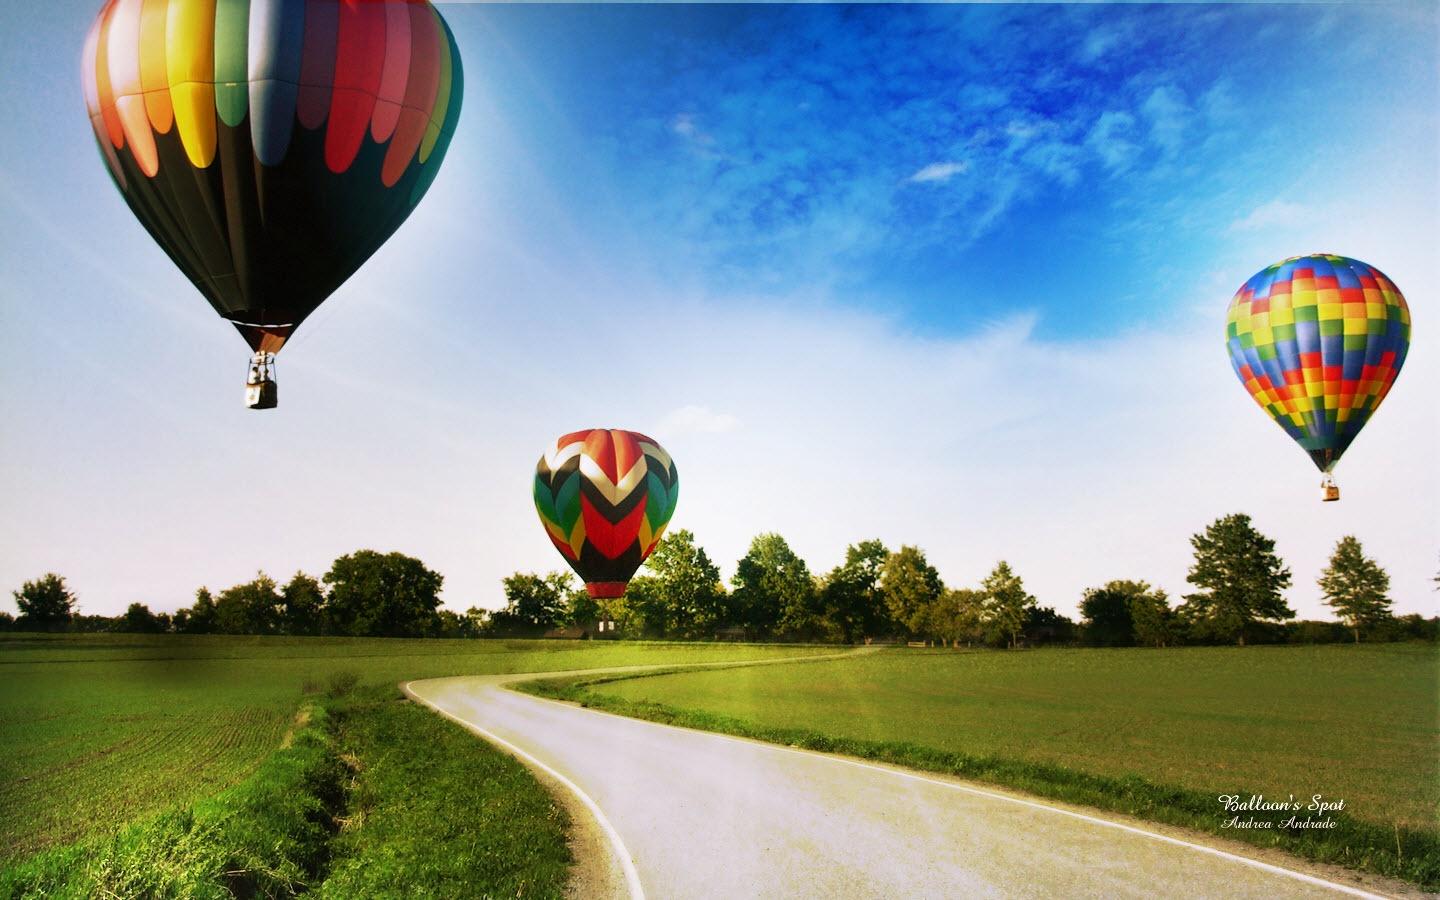 Balloons Spot Wallpaper in jpg format for free download